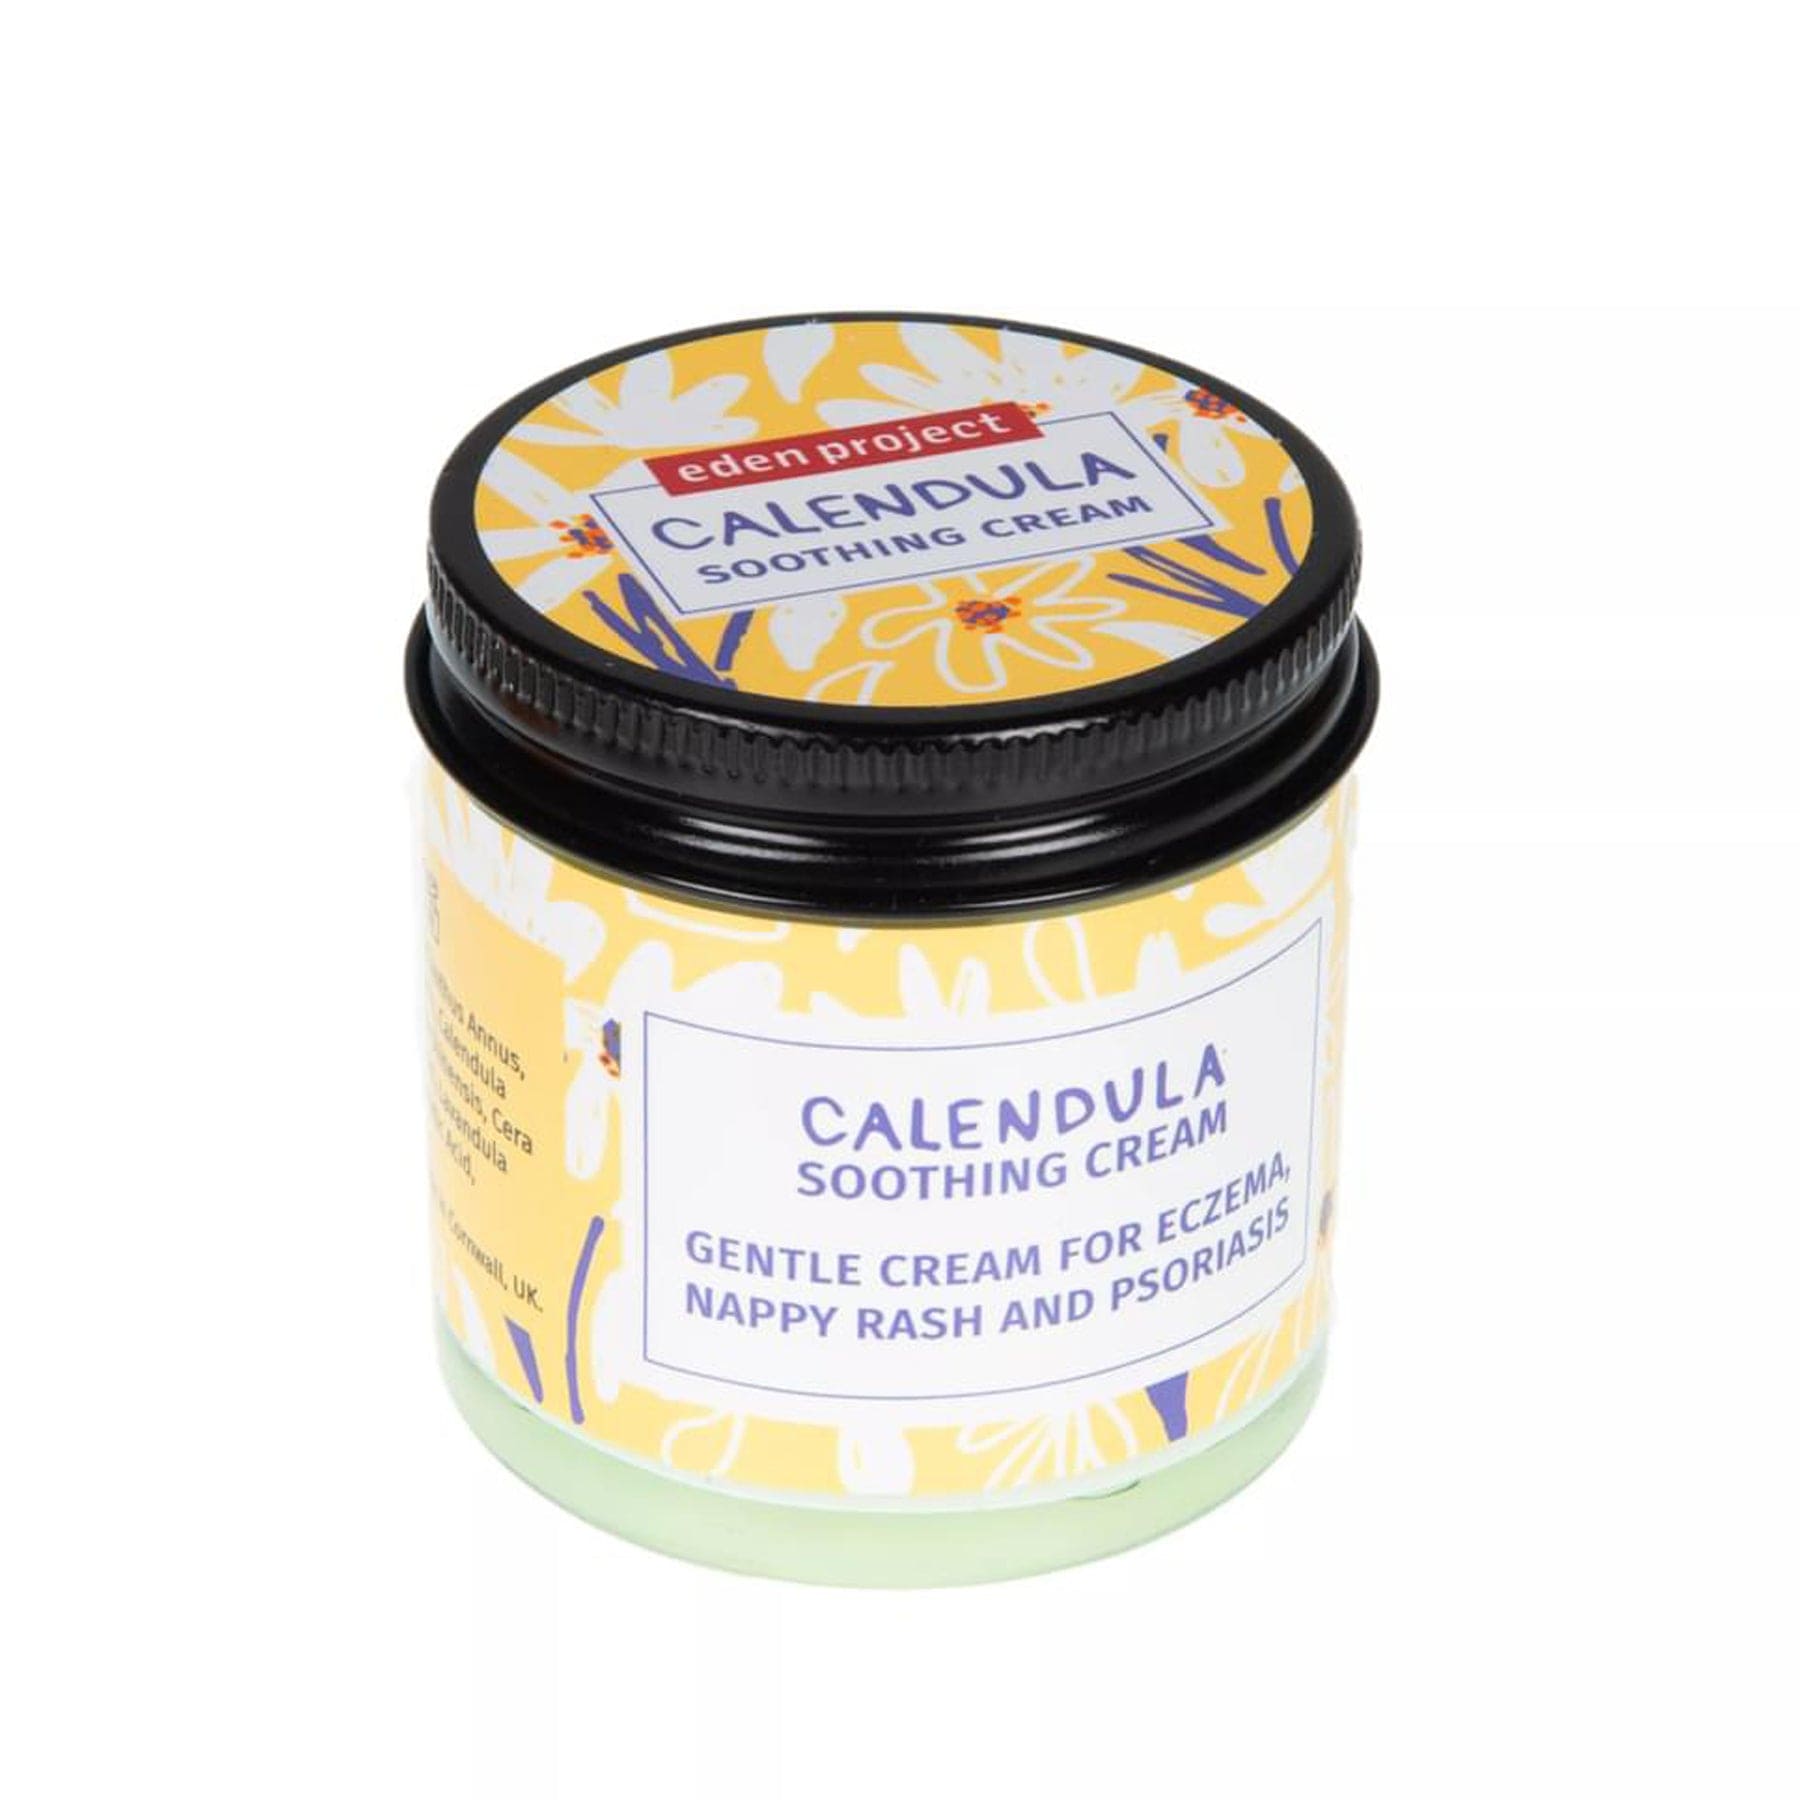 Calendula soothing cream